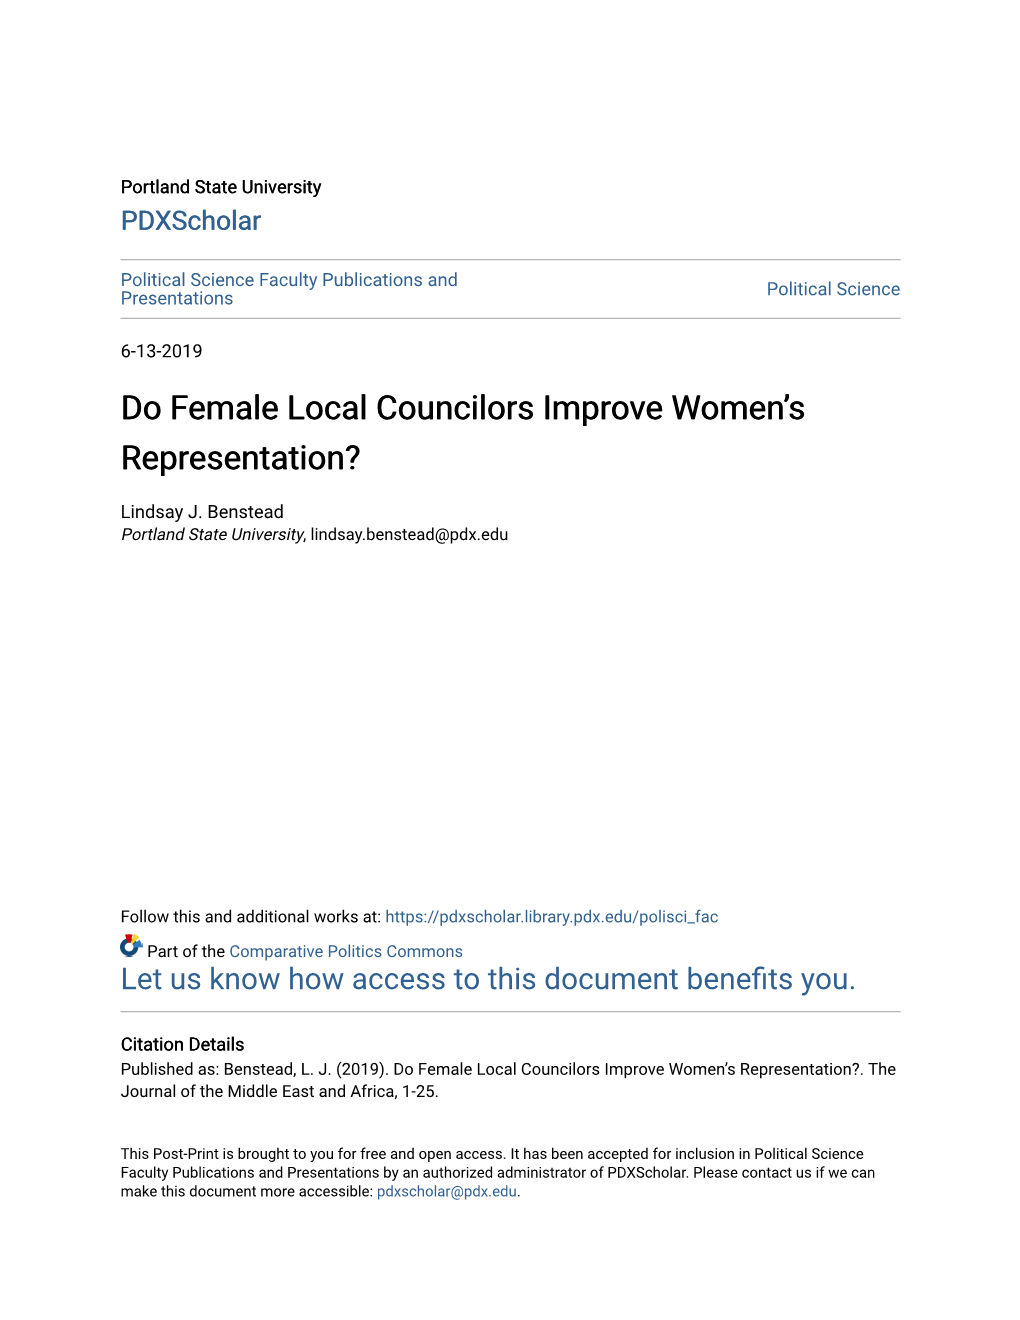 Do Female Local Councilors Improve Women's